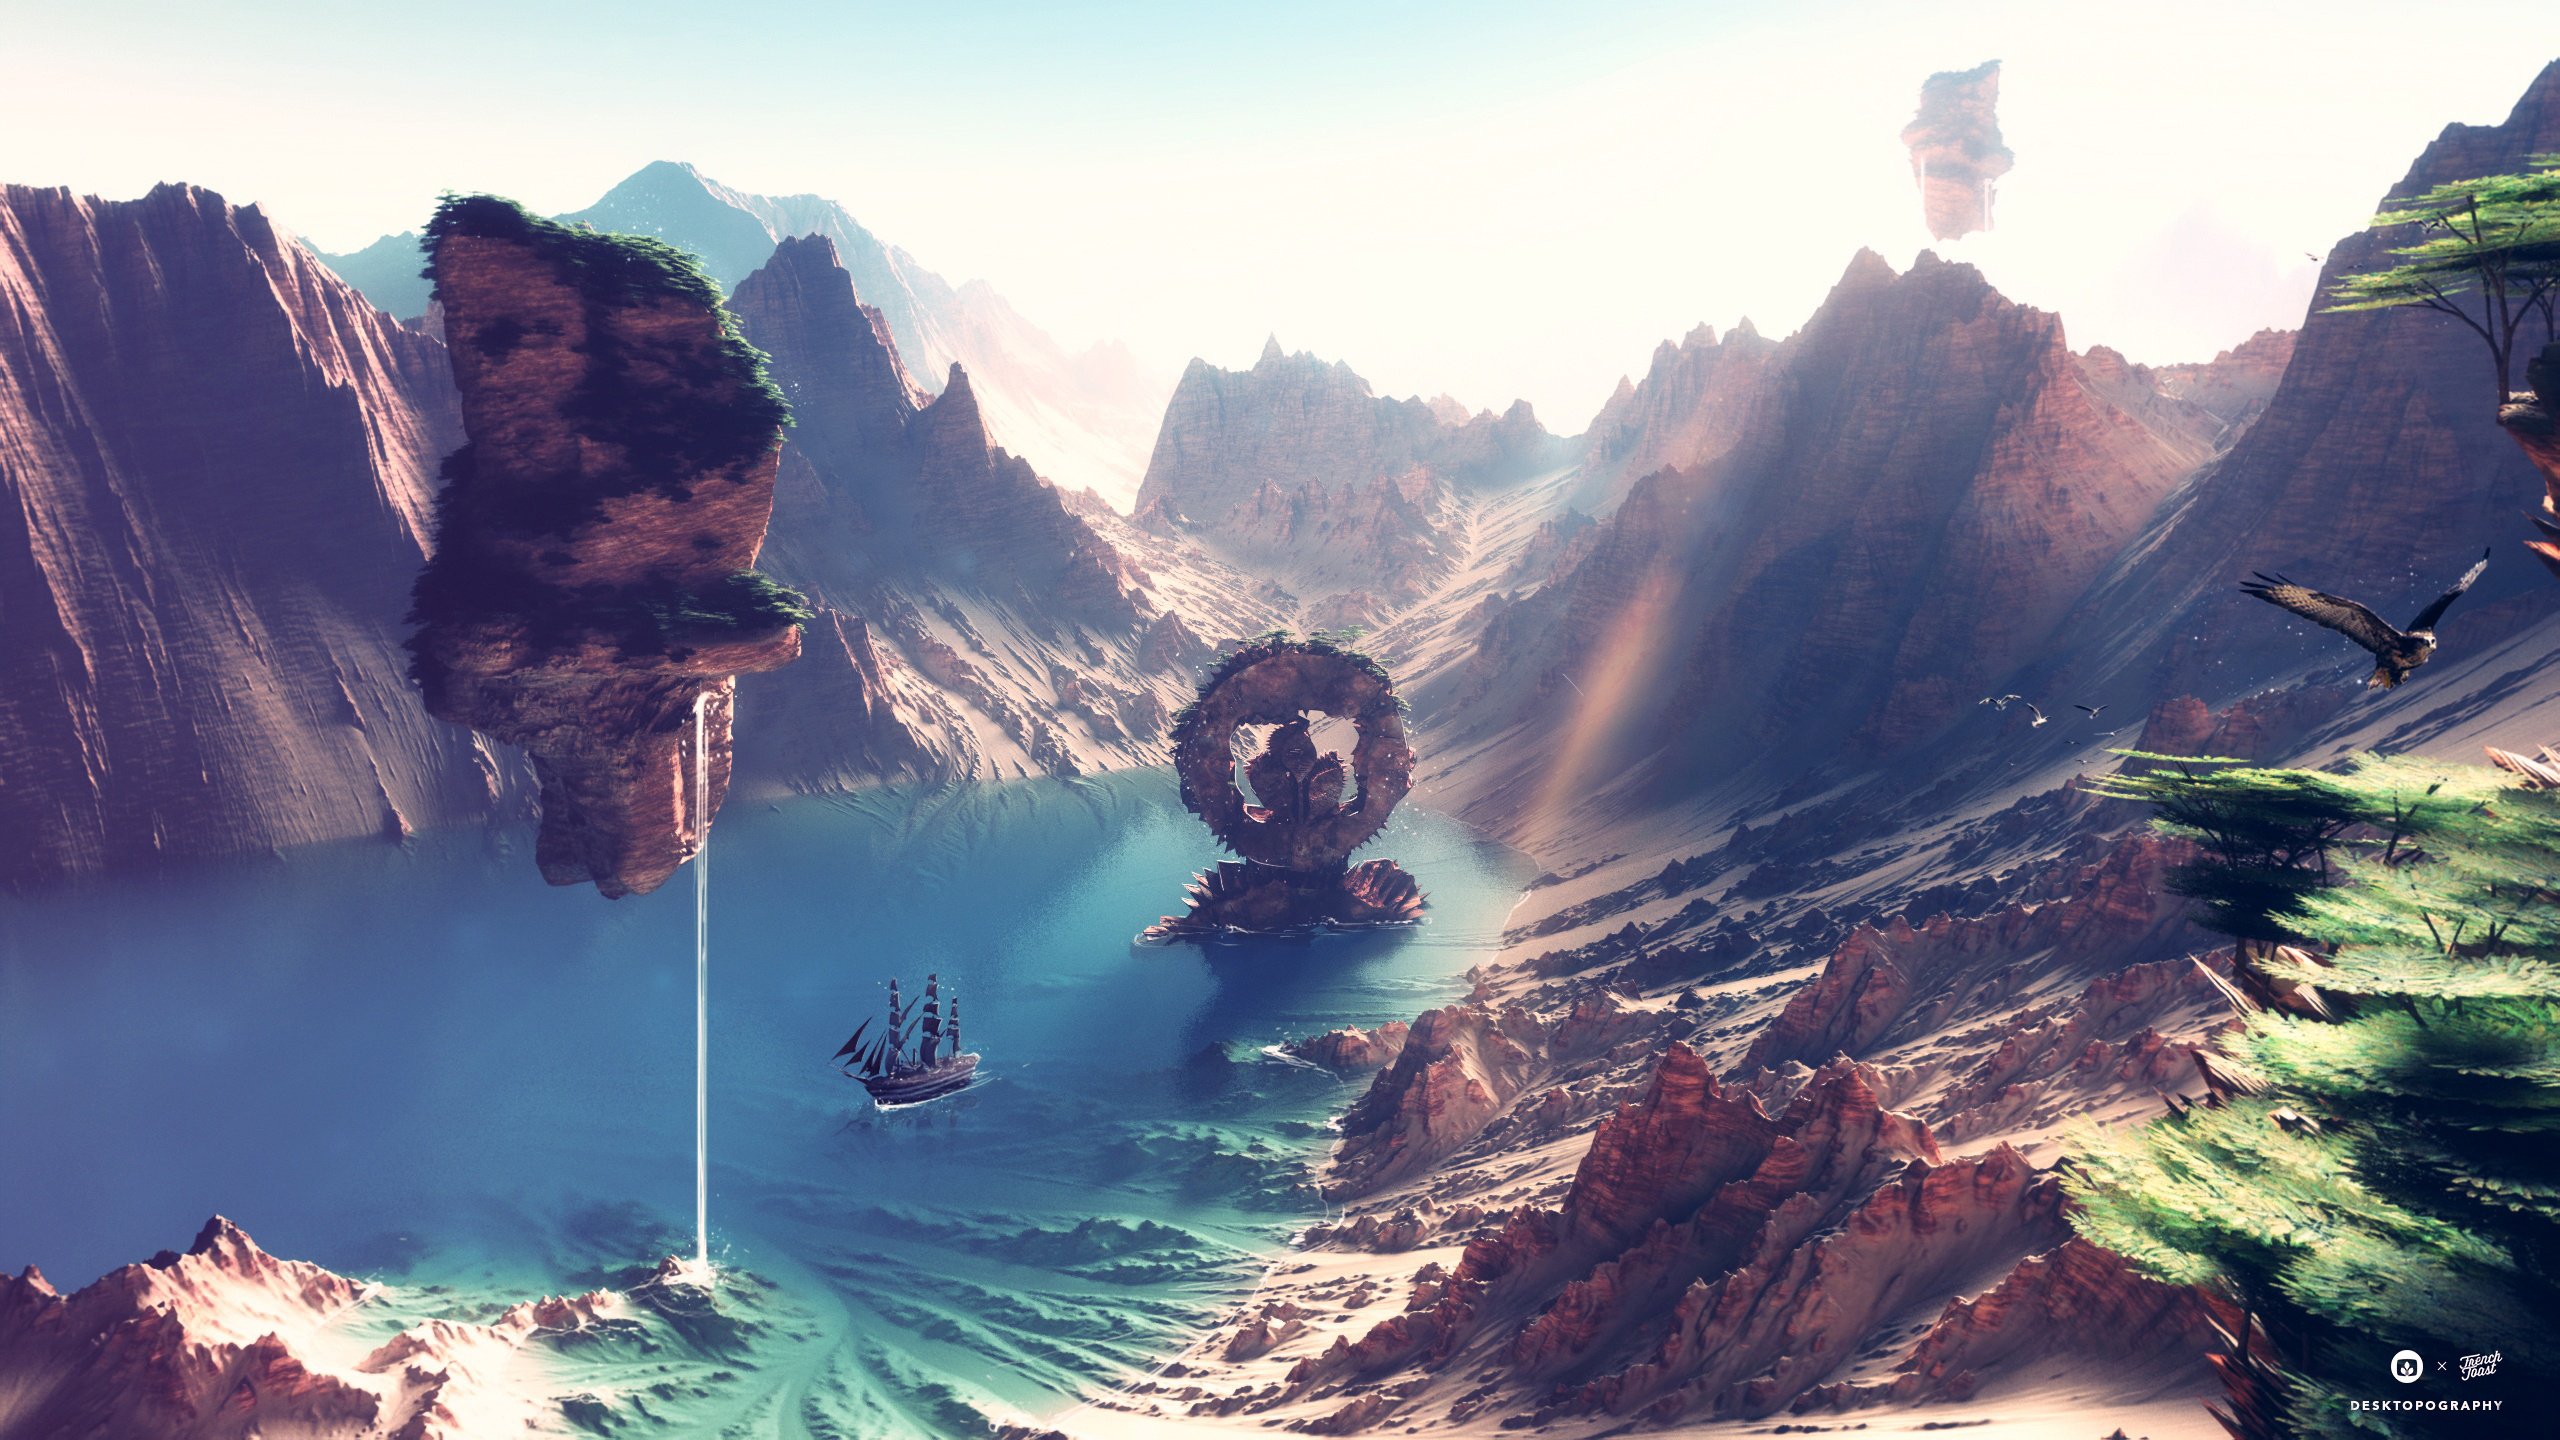 Fantastic World Mountains 3d Graphics Lake Wallpapers Hd Desktop